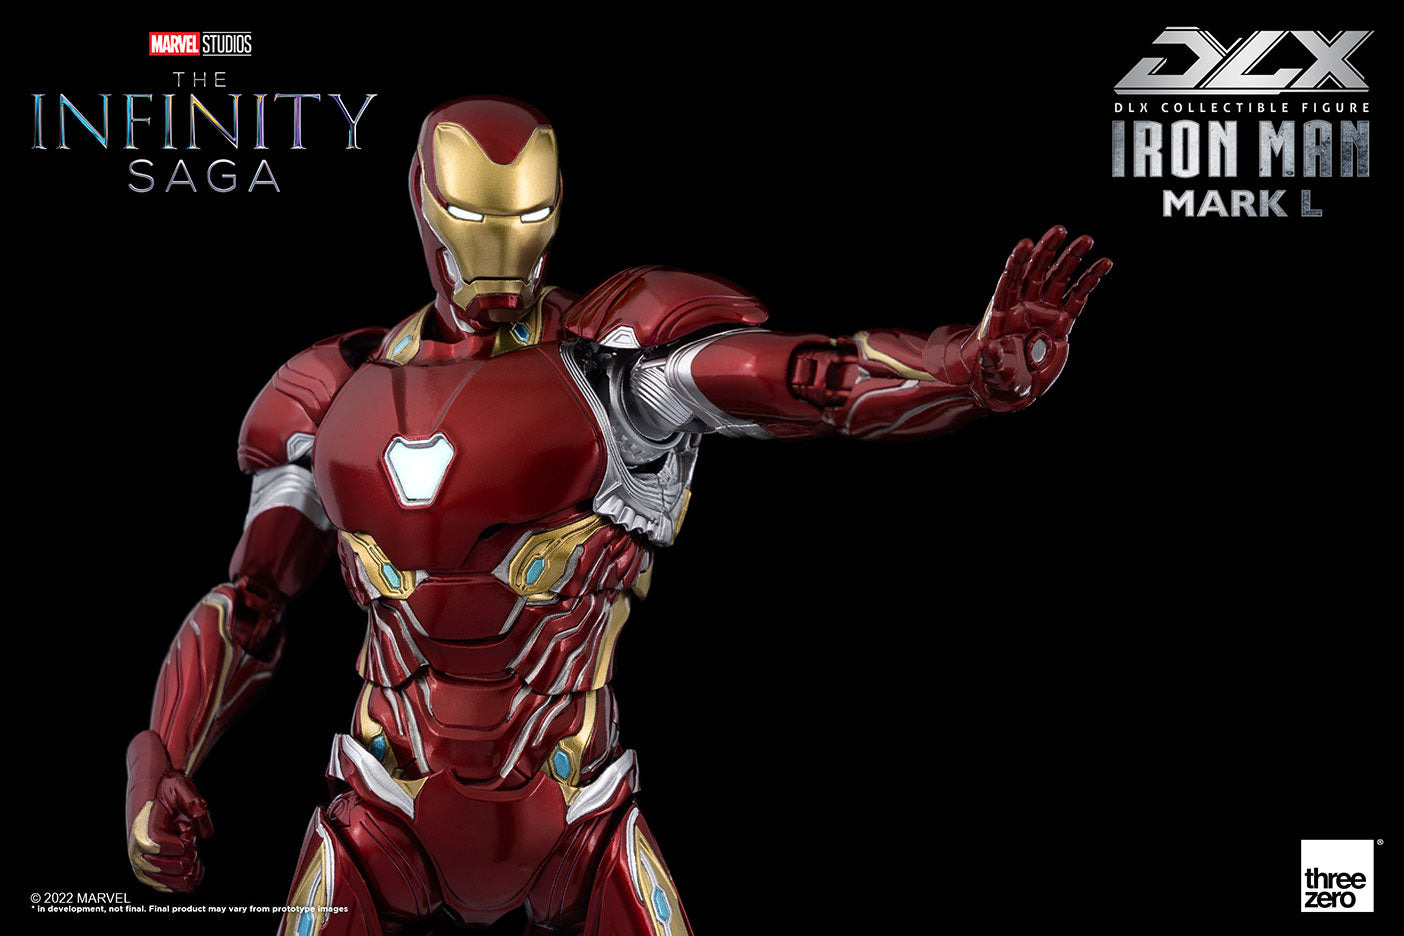 Marvel Studios: The Infinity Saga DLX Iron Man Mark 50